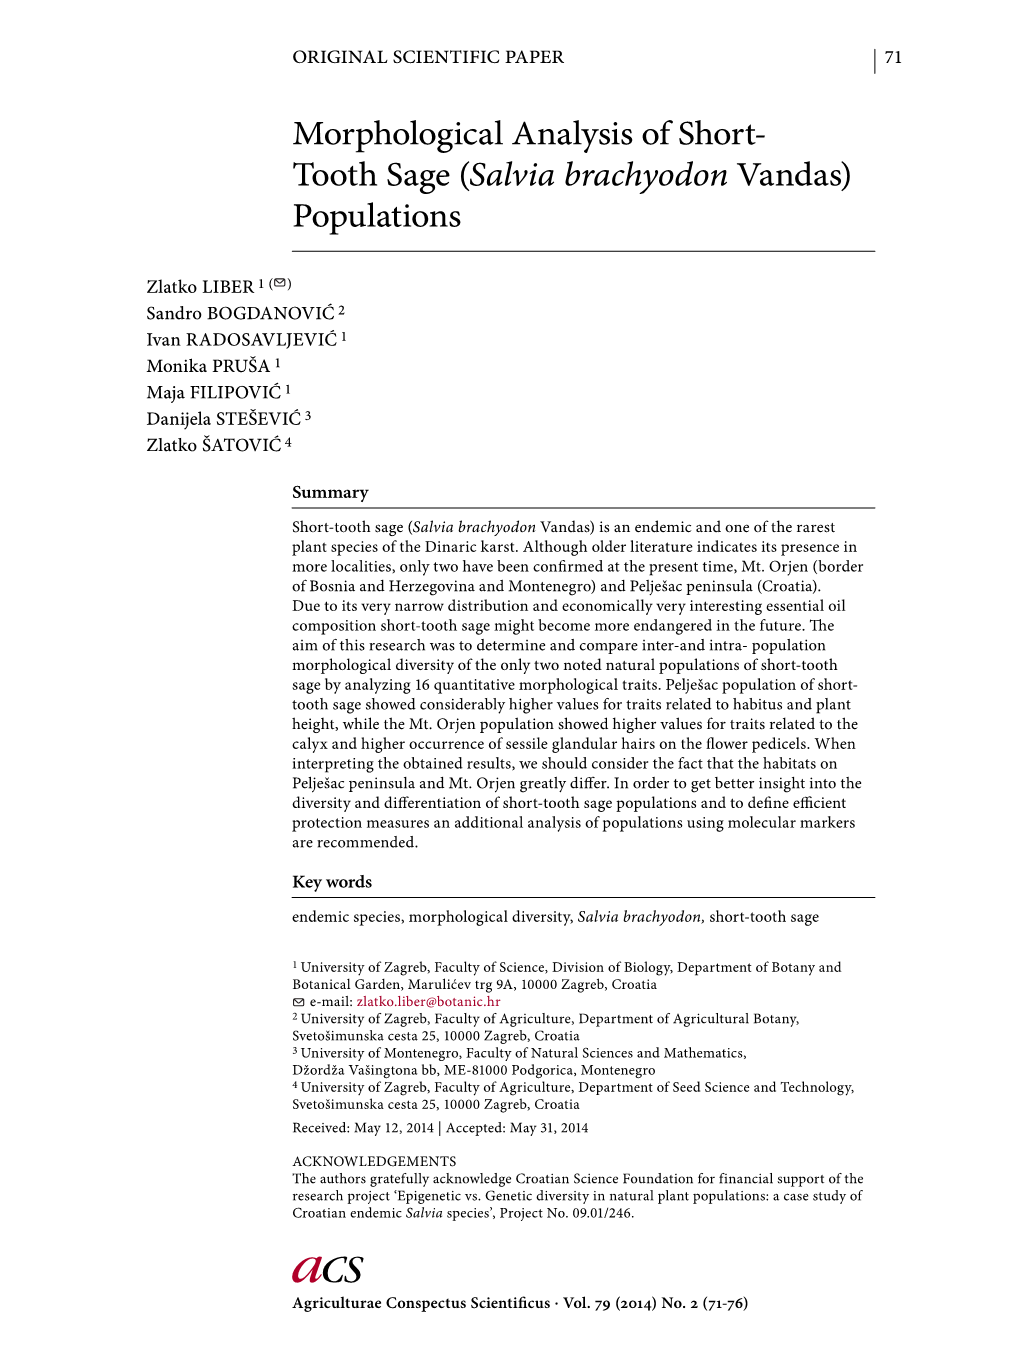 Morphological Analysis of Short- Tooth Sage (Salvia Brachyodon Vandas) Populations